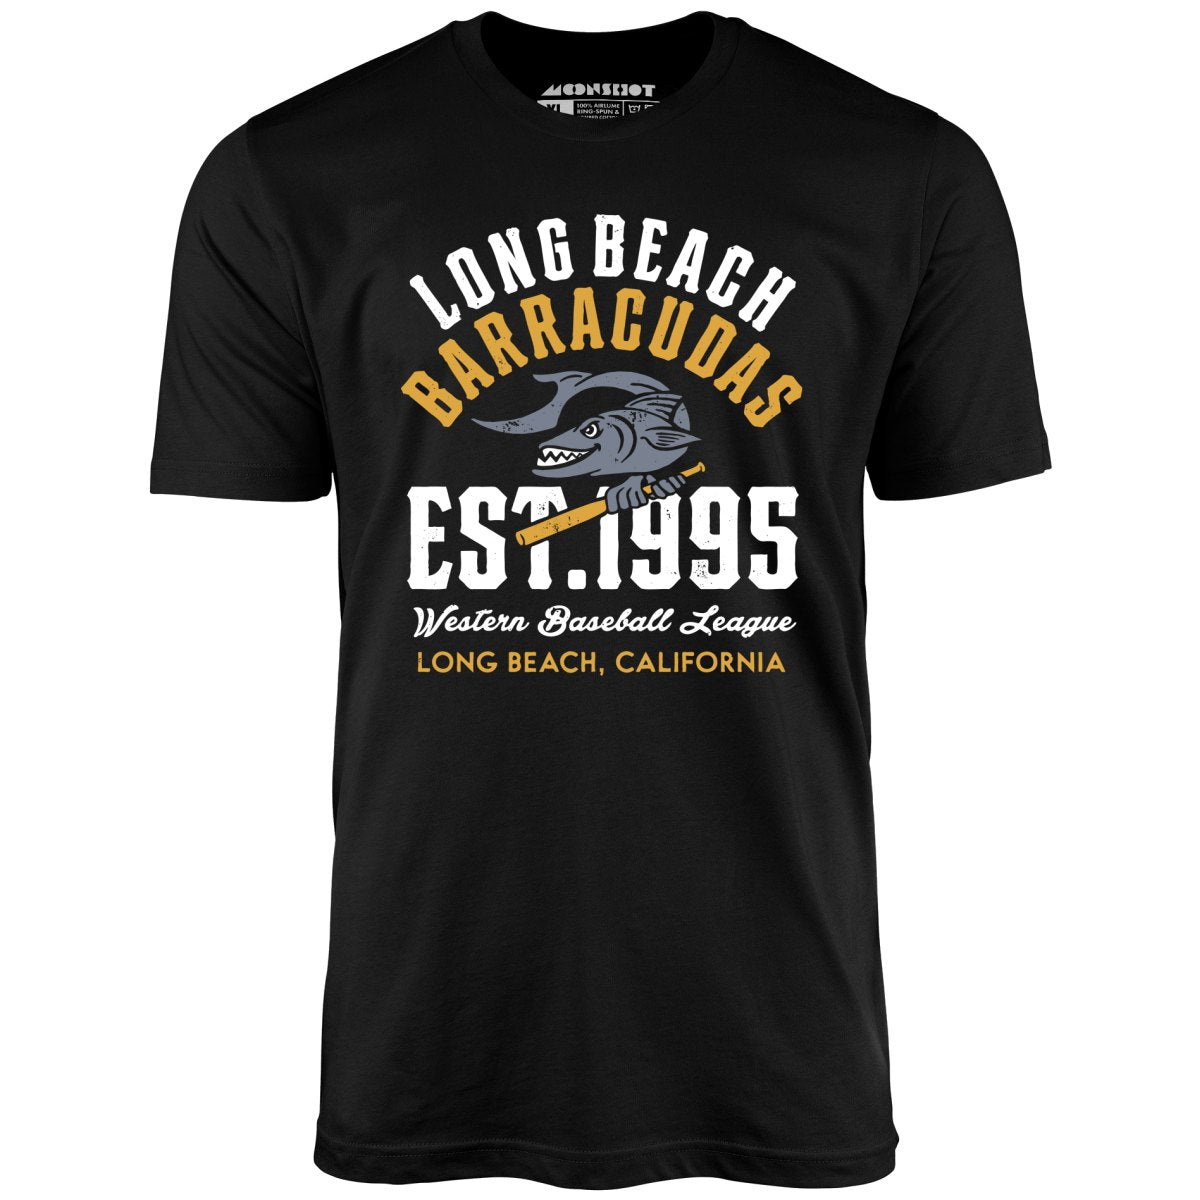 Long Beach Barracudas - California - Vintage Defunct Baseball Teams - Unisex T-Shirt